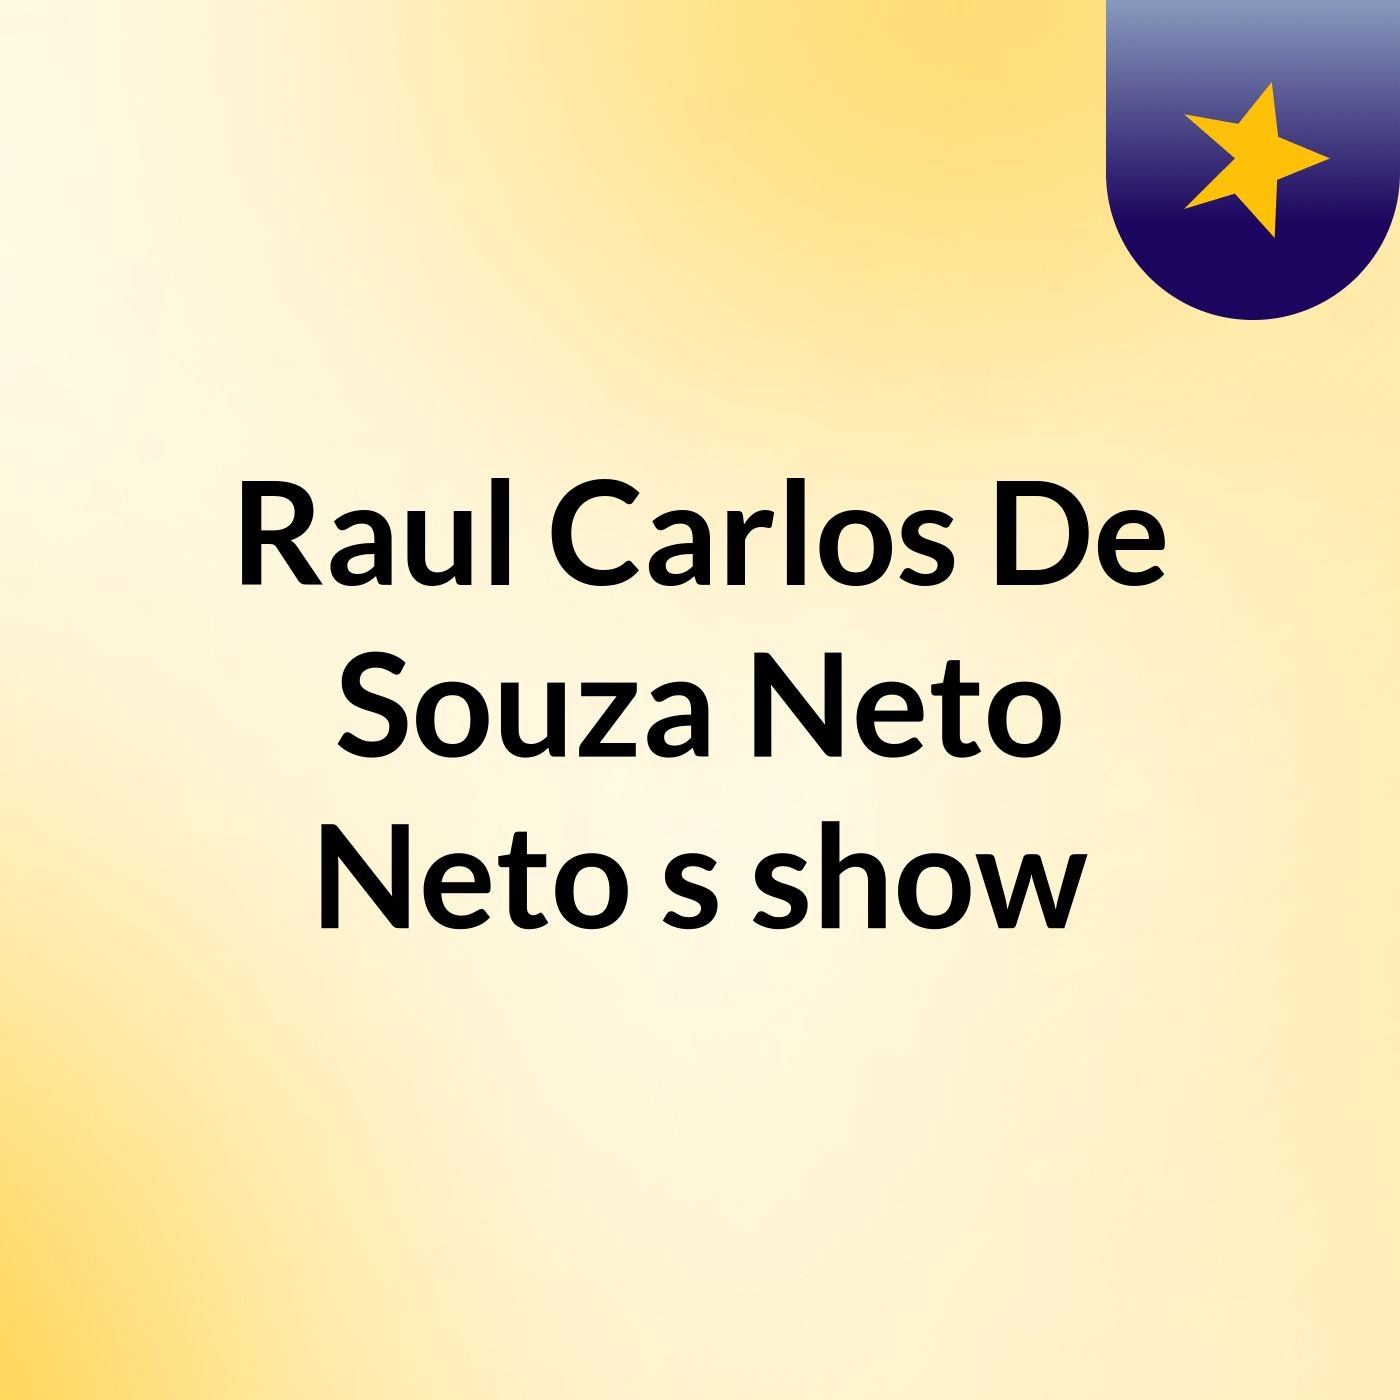 Raul Carlos De Souza Neto Neto's show